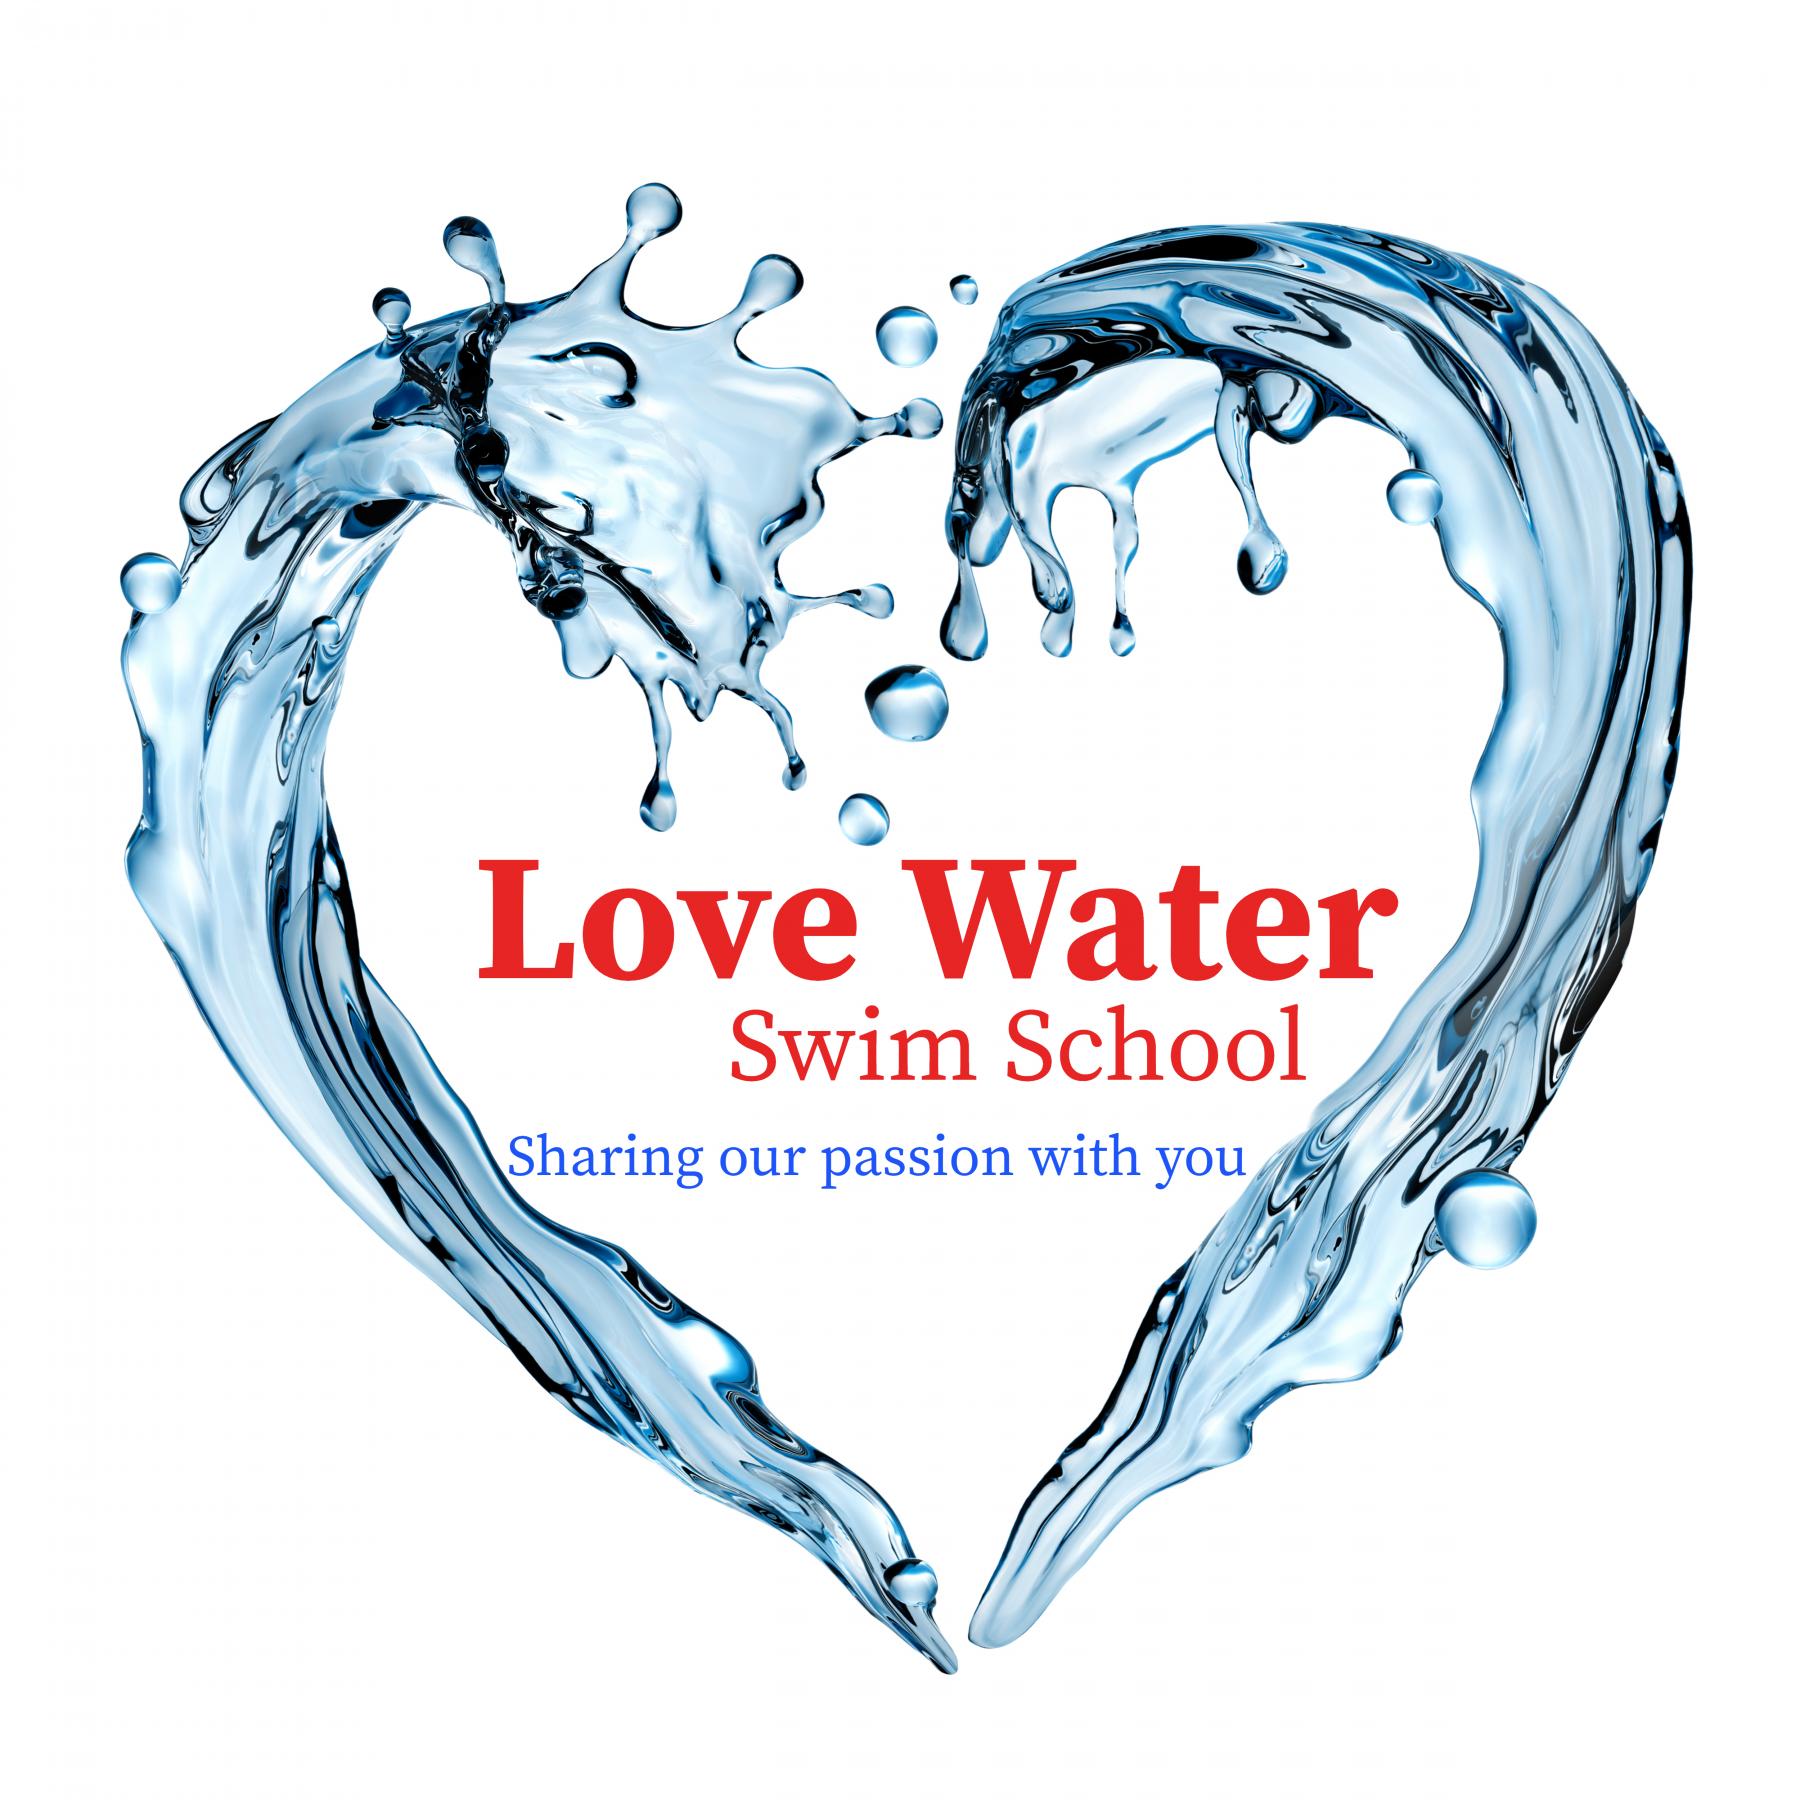 Love Water Swim School Swimming lessons in Hertfordshire